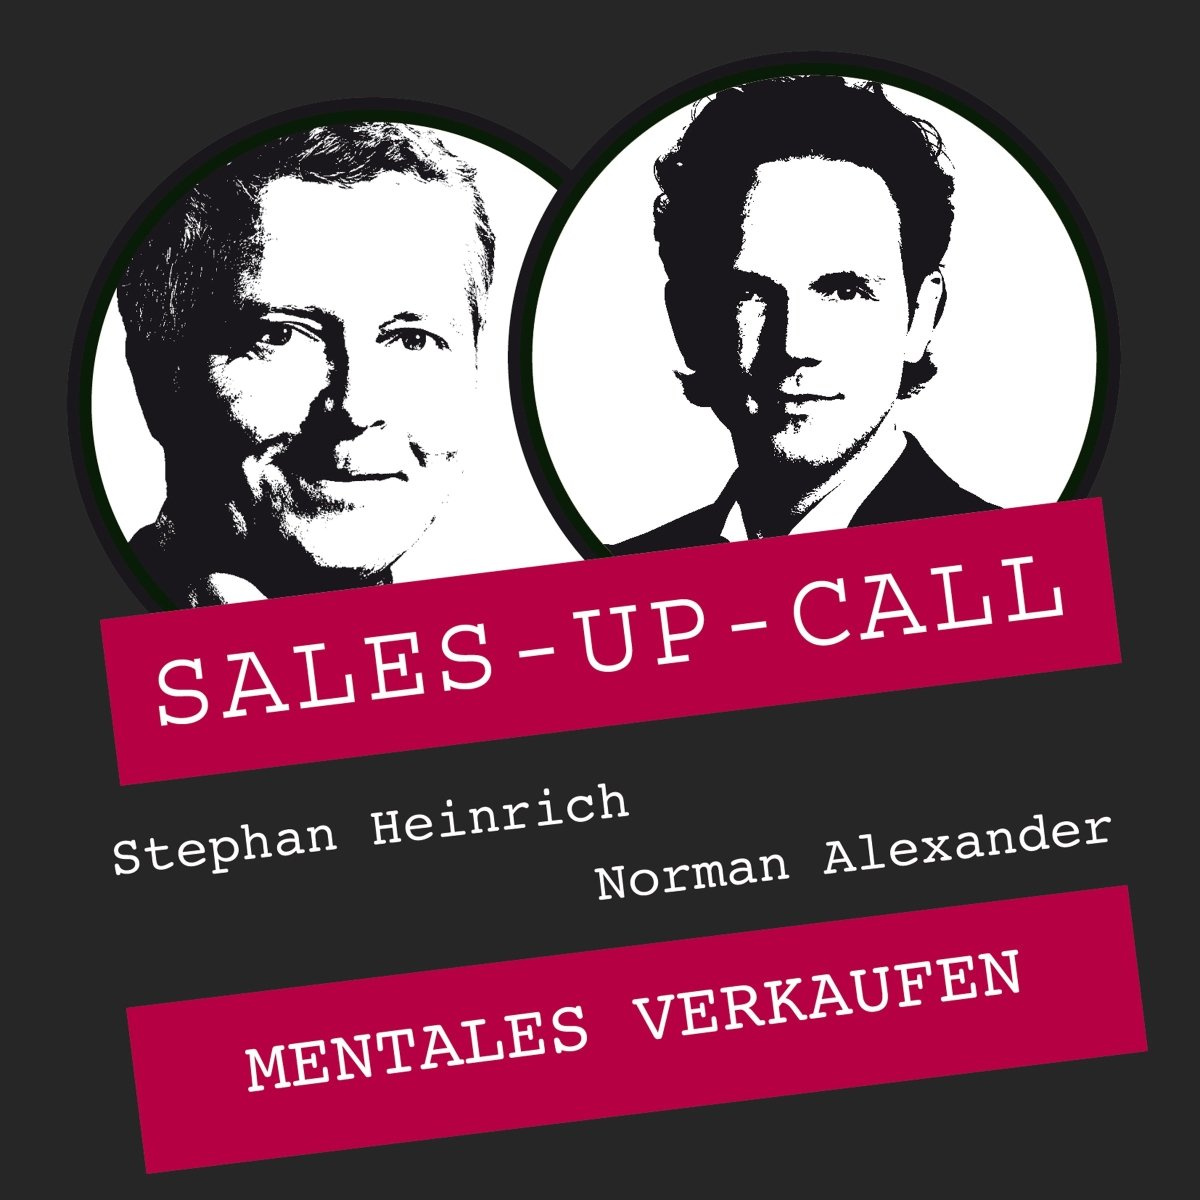 Mentales Verkaufen - Sales-up-Call - Stephan Heinrich